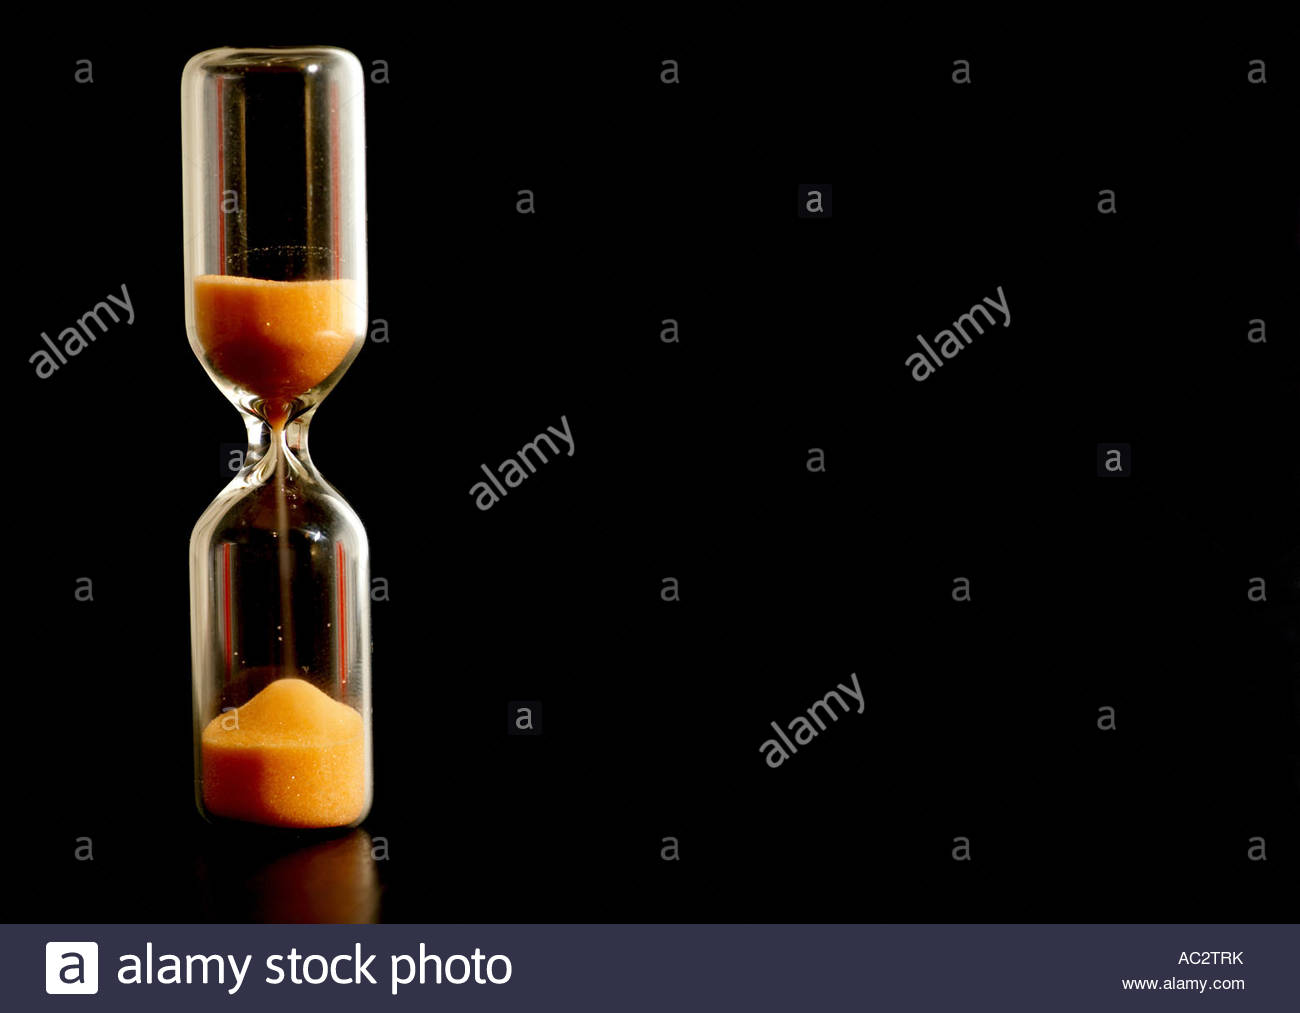 Egg timer Hourglass Stock Photo